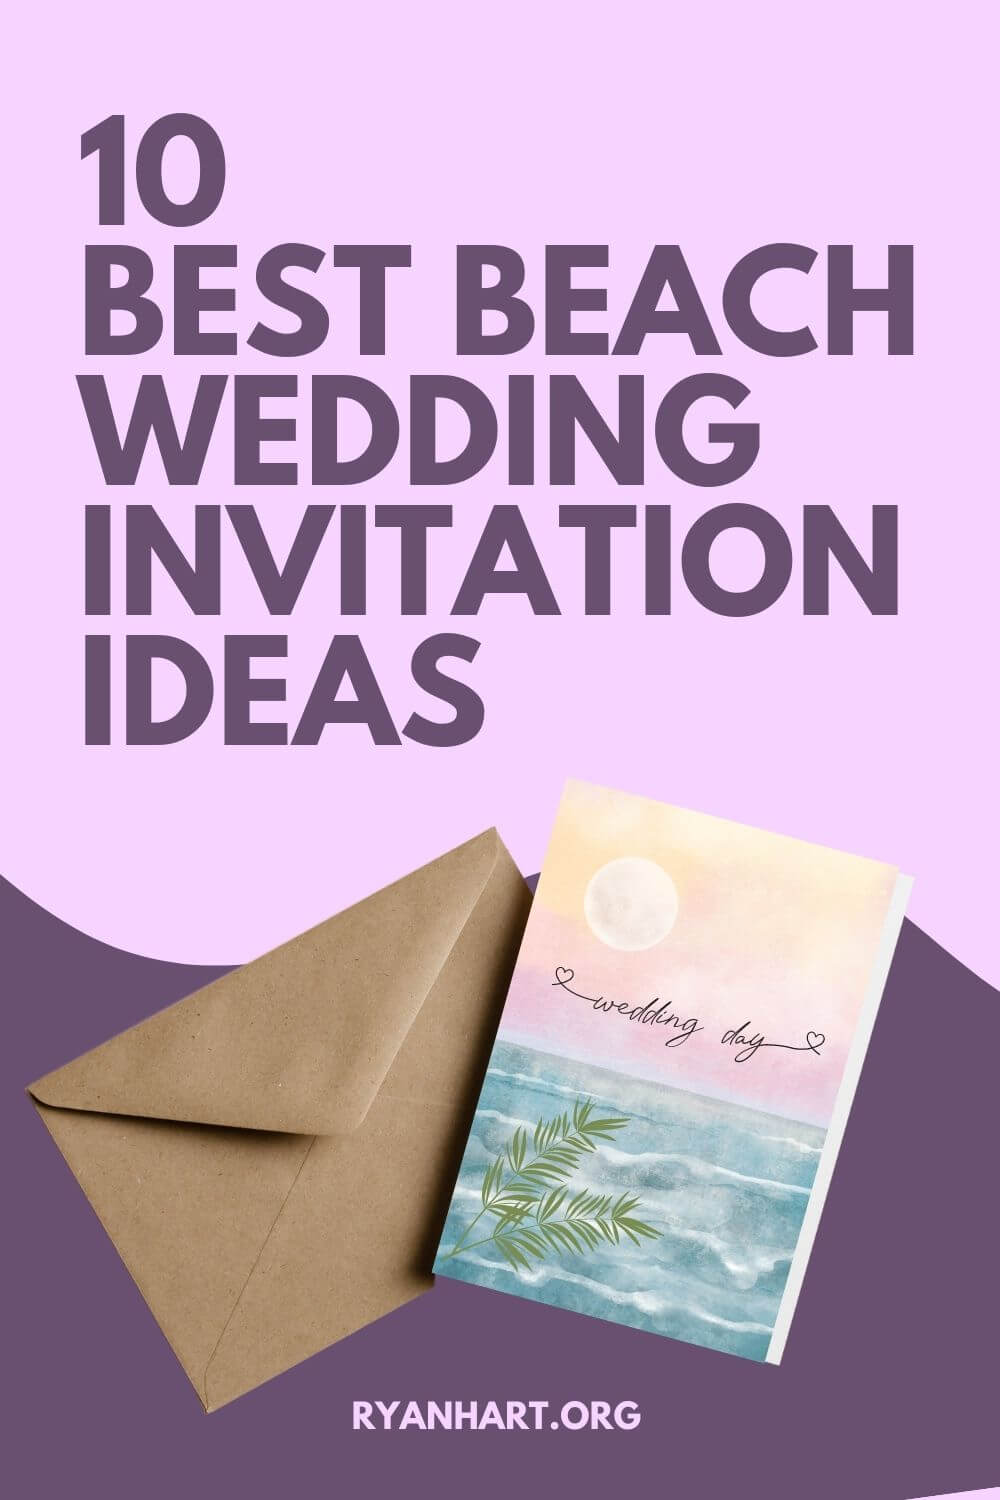 Invitation for beach weddings